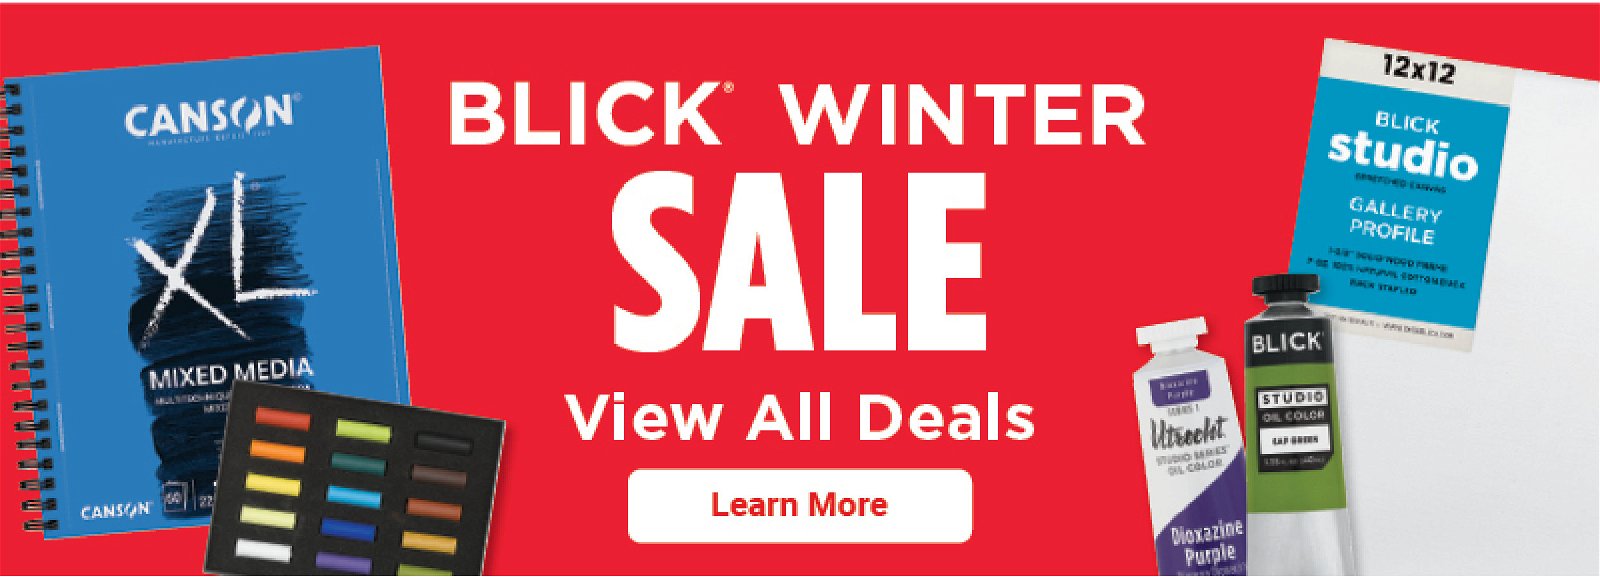 Blick Winter Sale: View All Deals